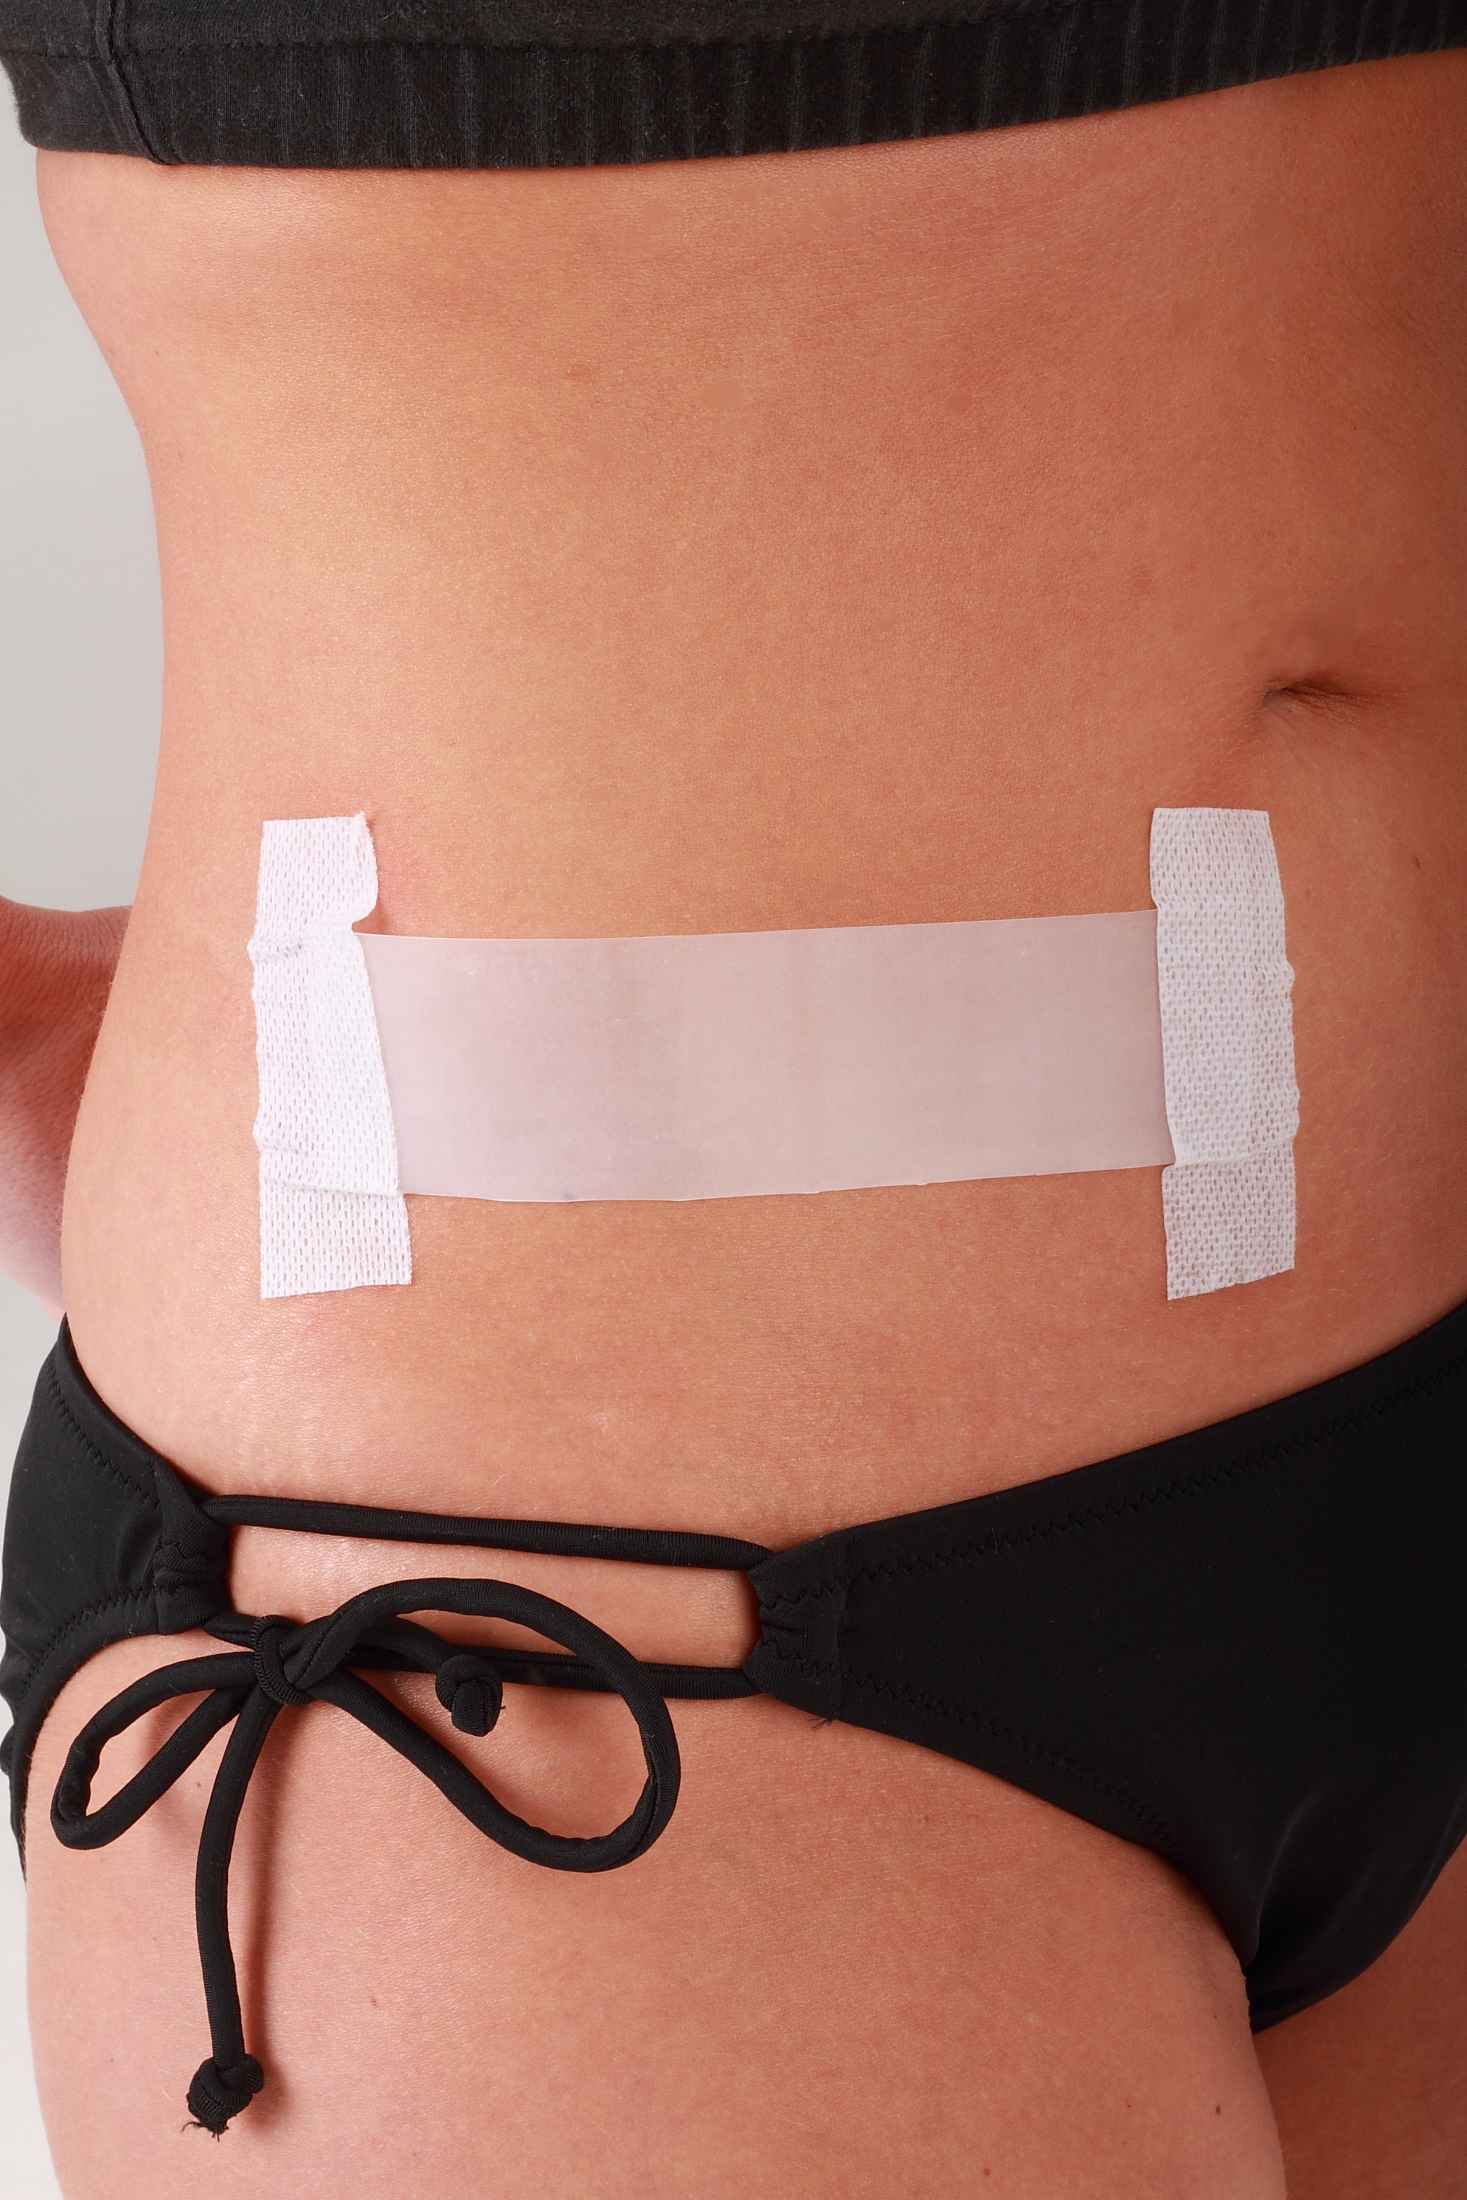  Tummy Tuck Post Surgery Supplies Kit - Silicone Scar